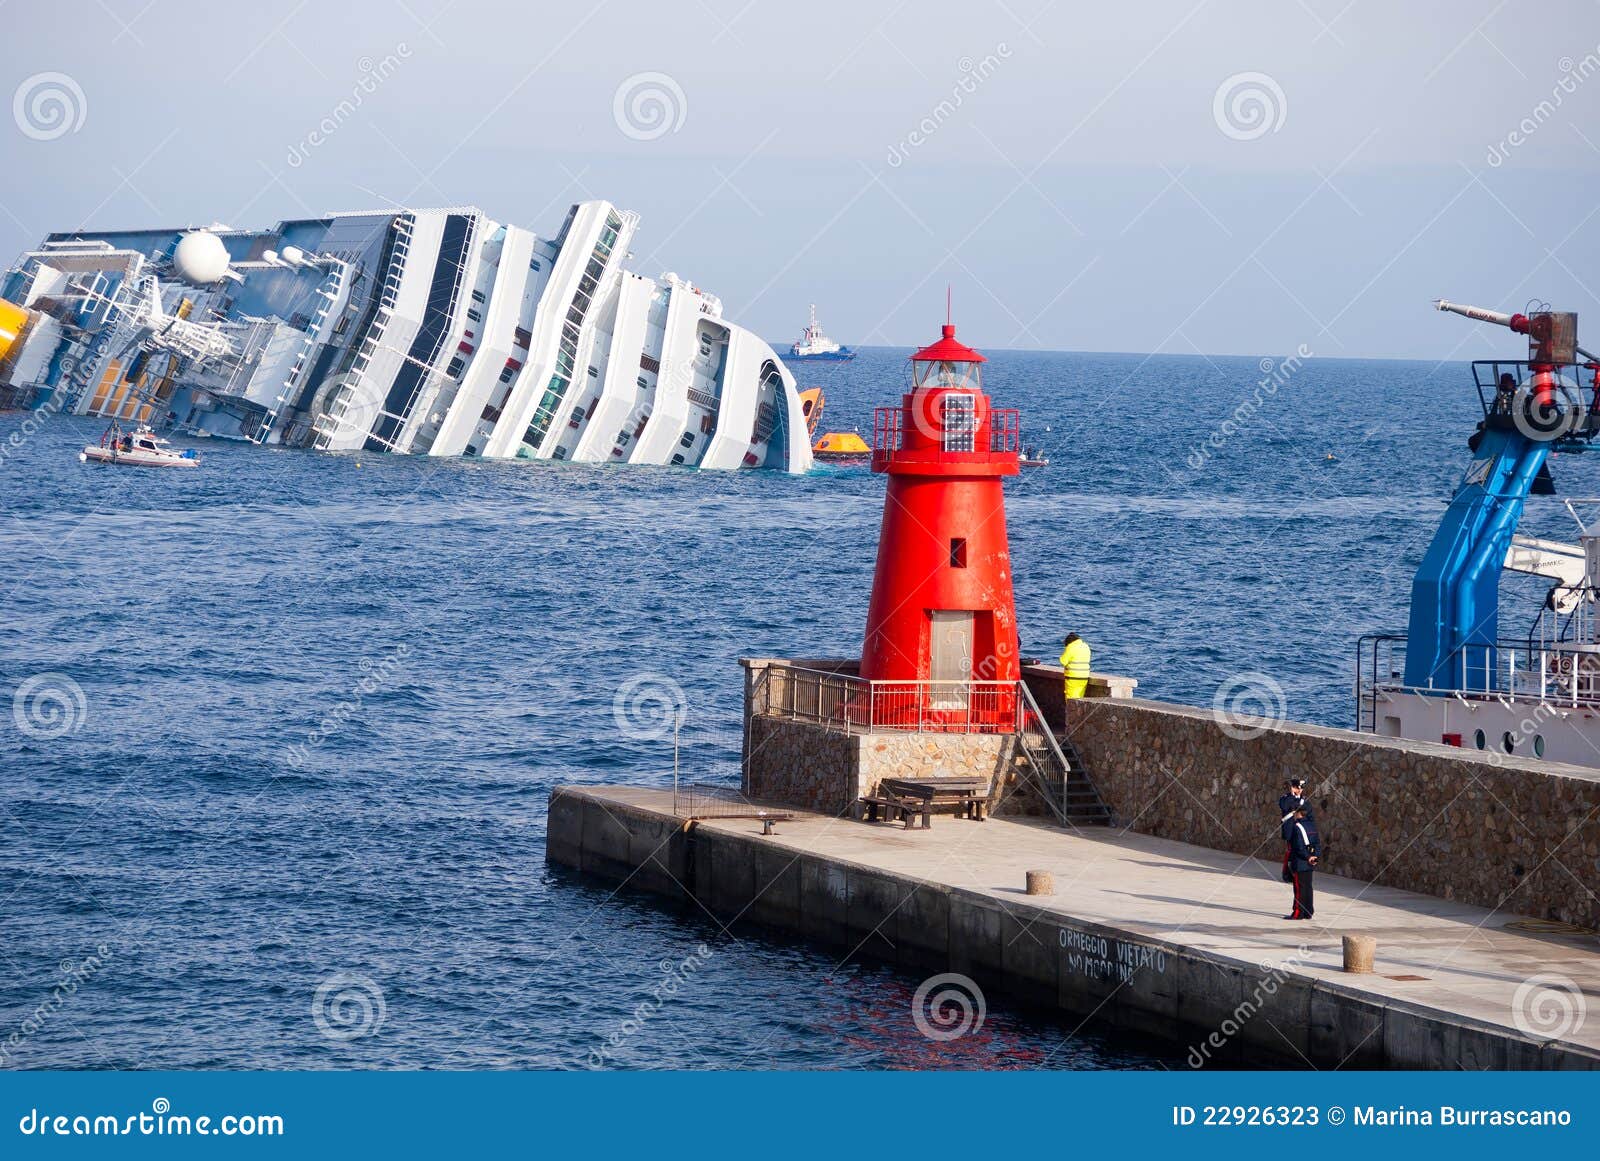 Sinking Cruise Ship Costa Concordia Editorial Stock Photo